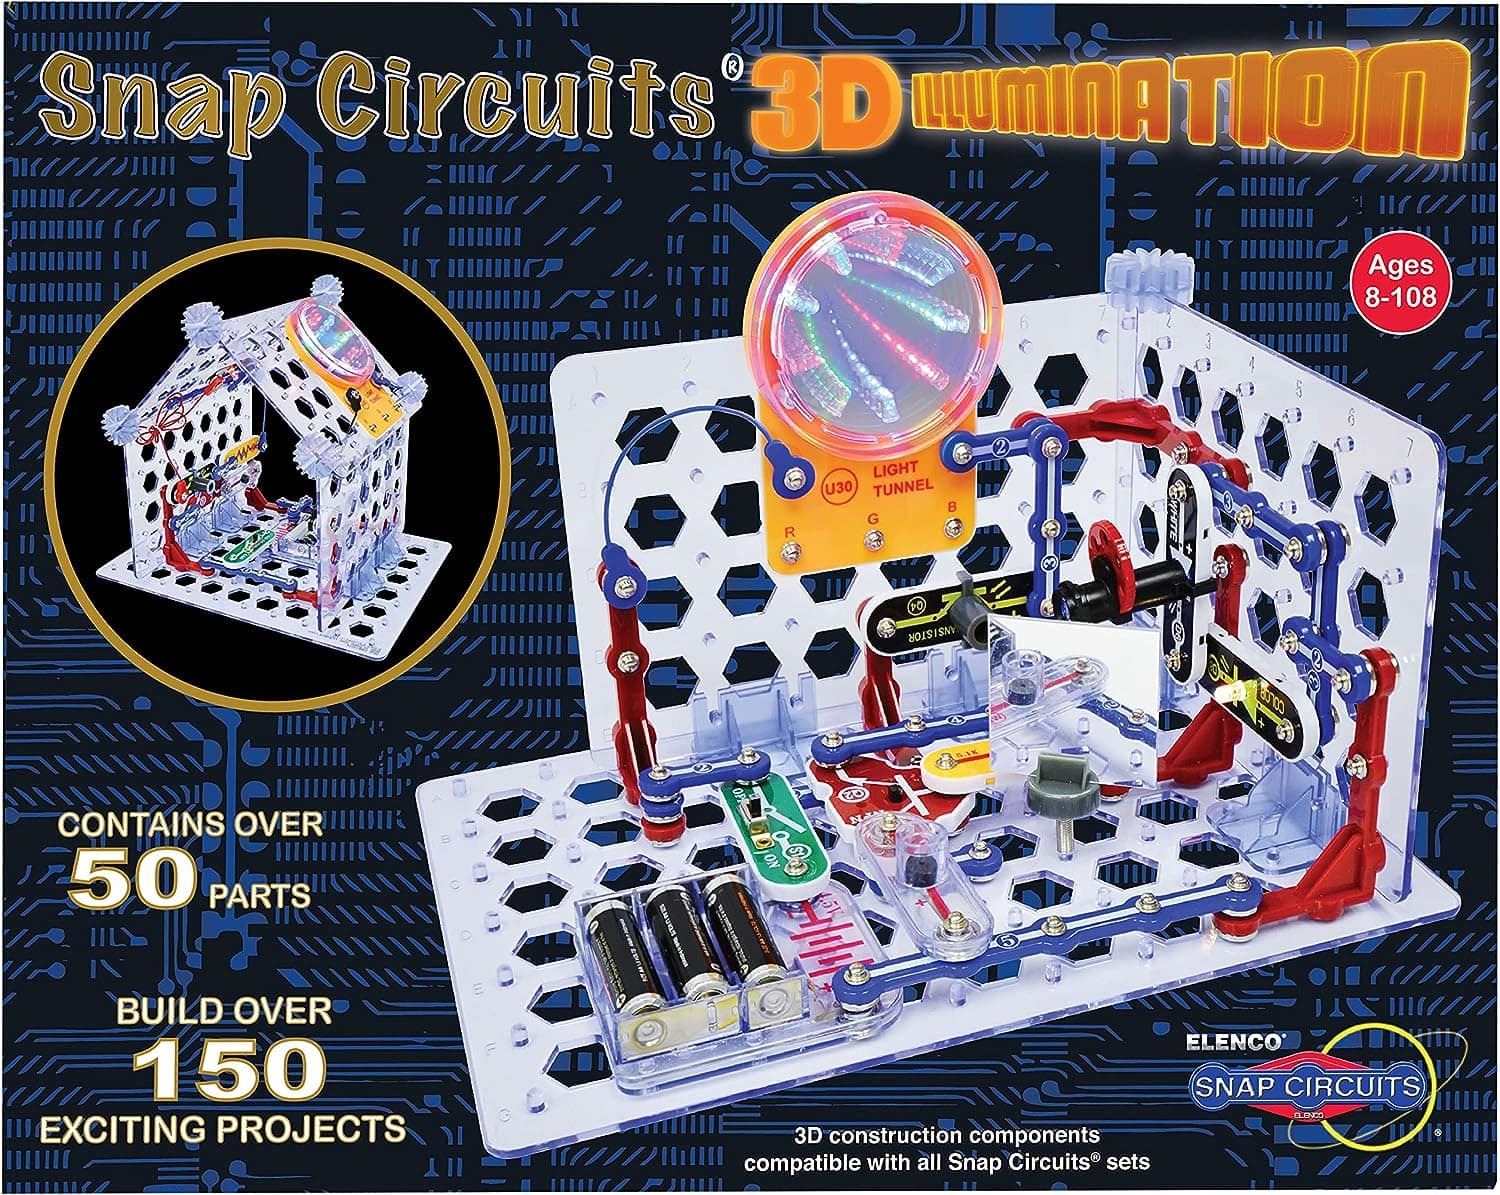 The Snap Circuits 3D Illumination Electronics Exploration Kit